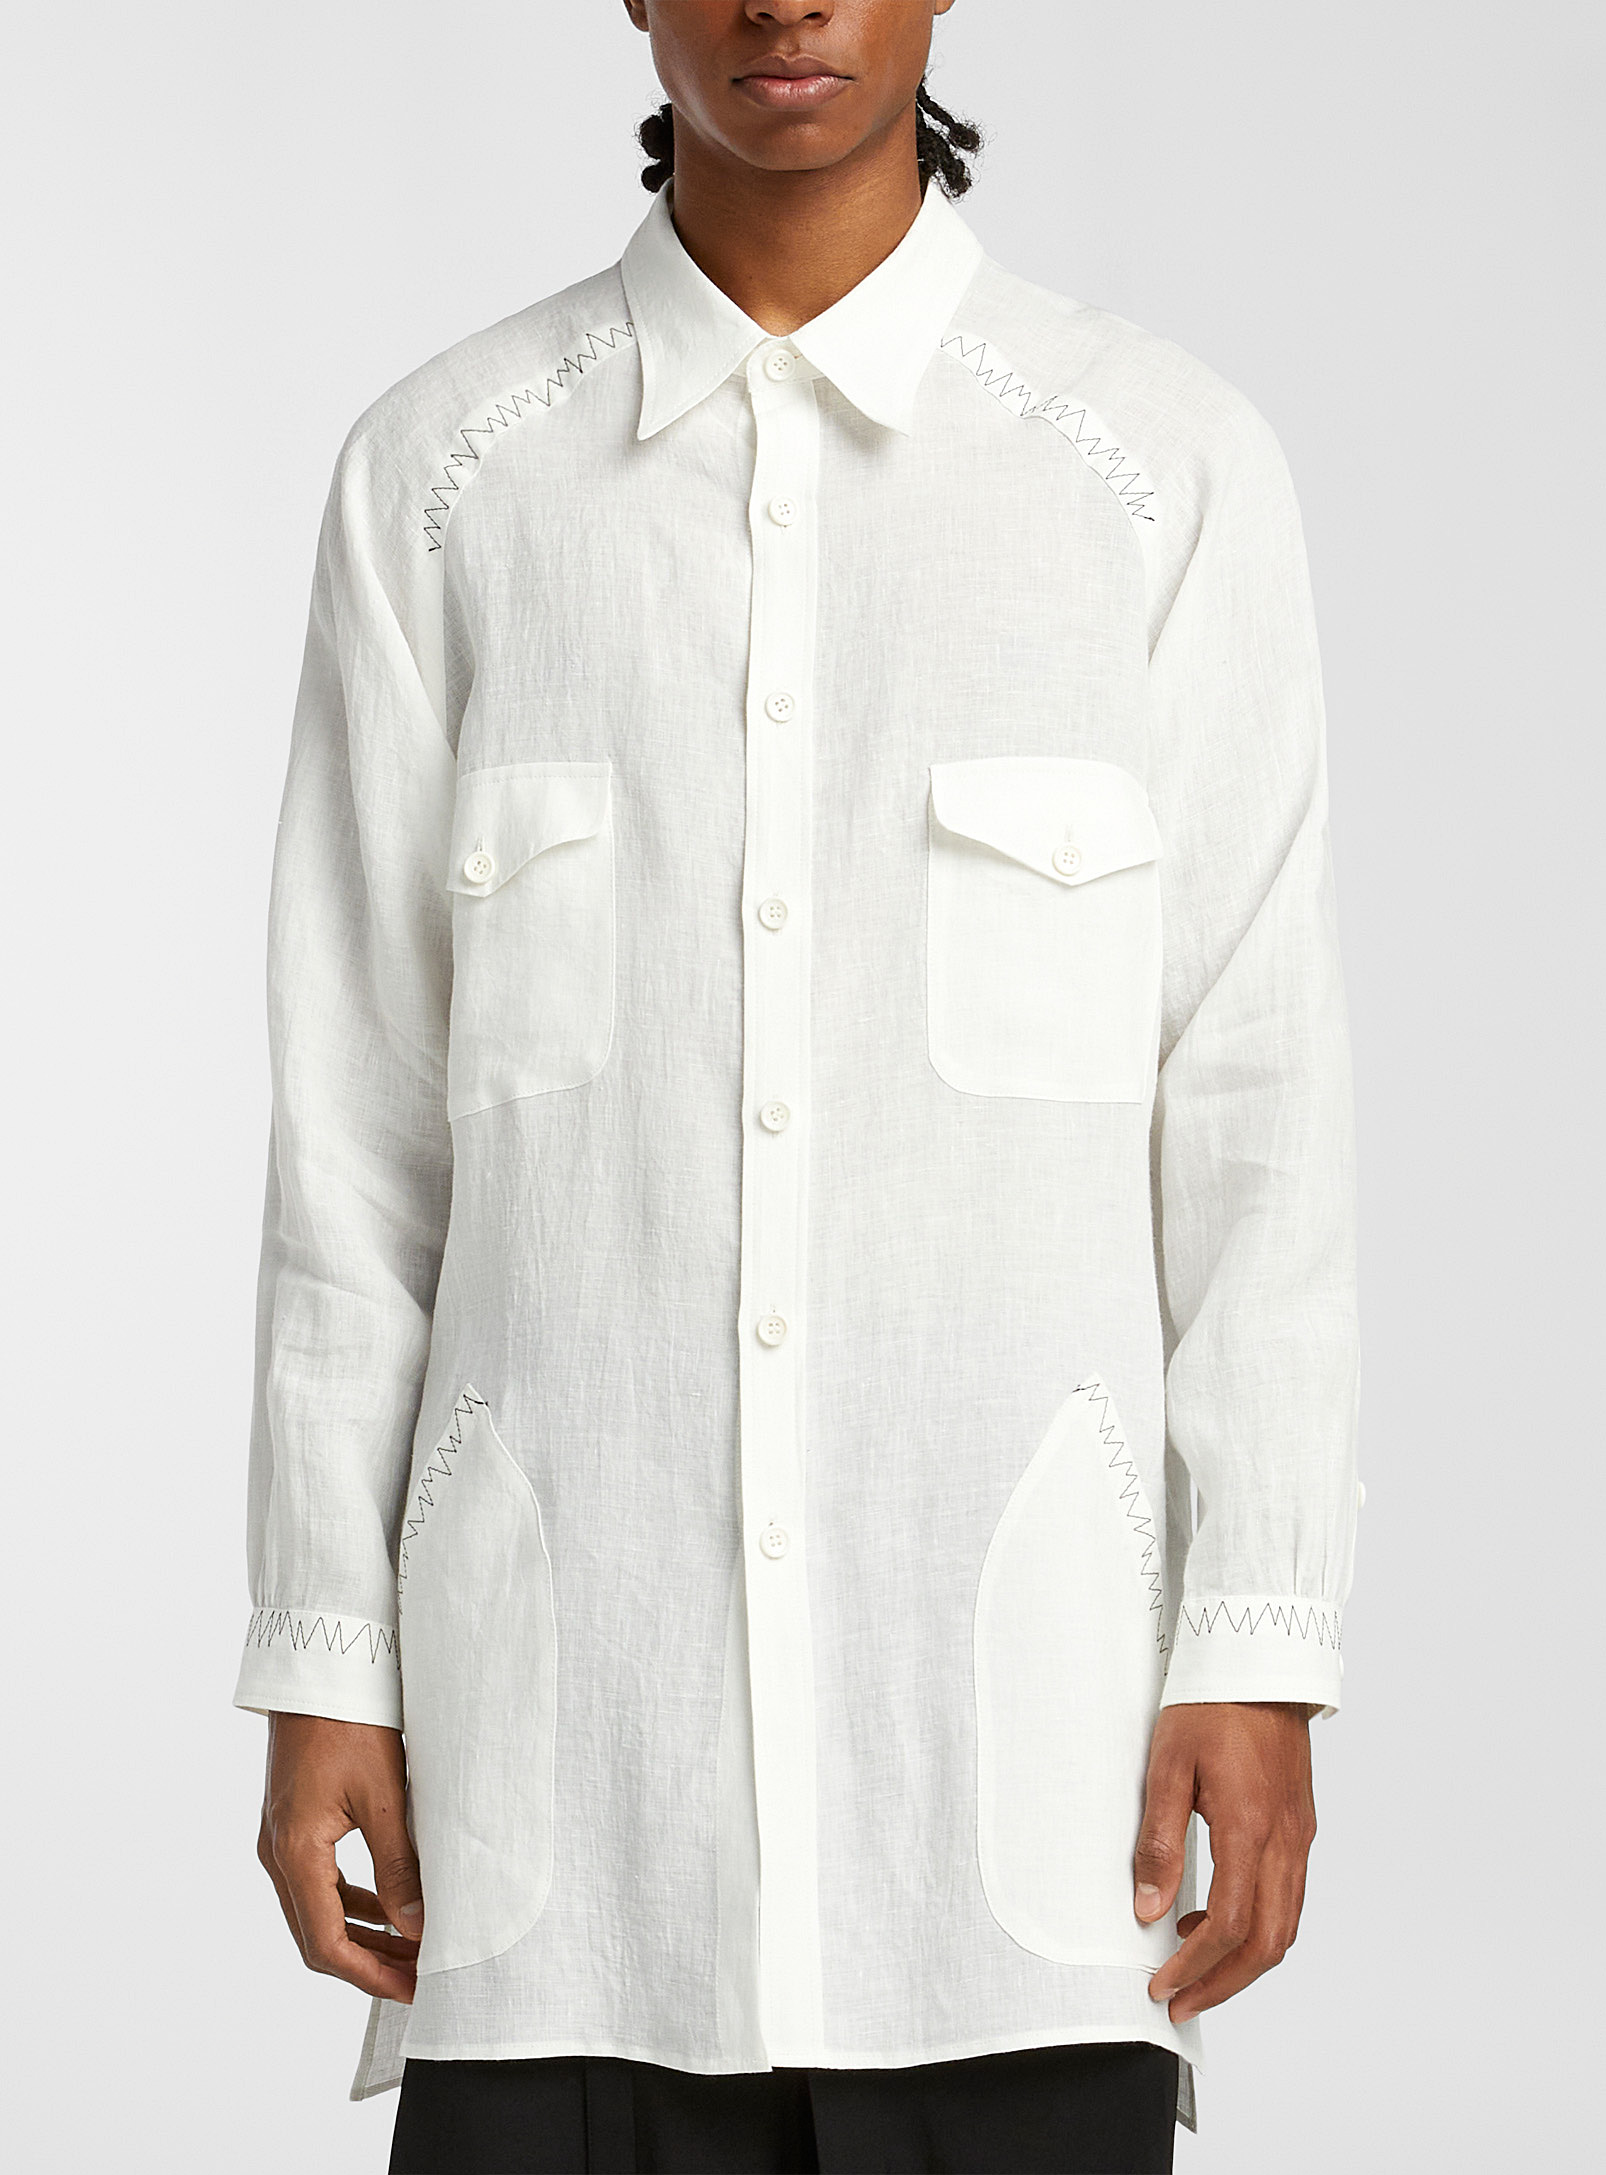 Yohji Yamamoto - Men's Graphic stitching long linen shirt